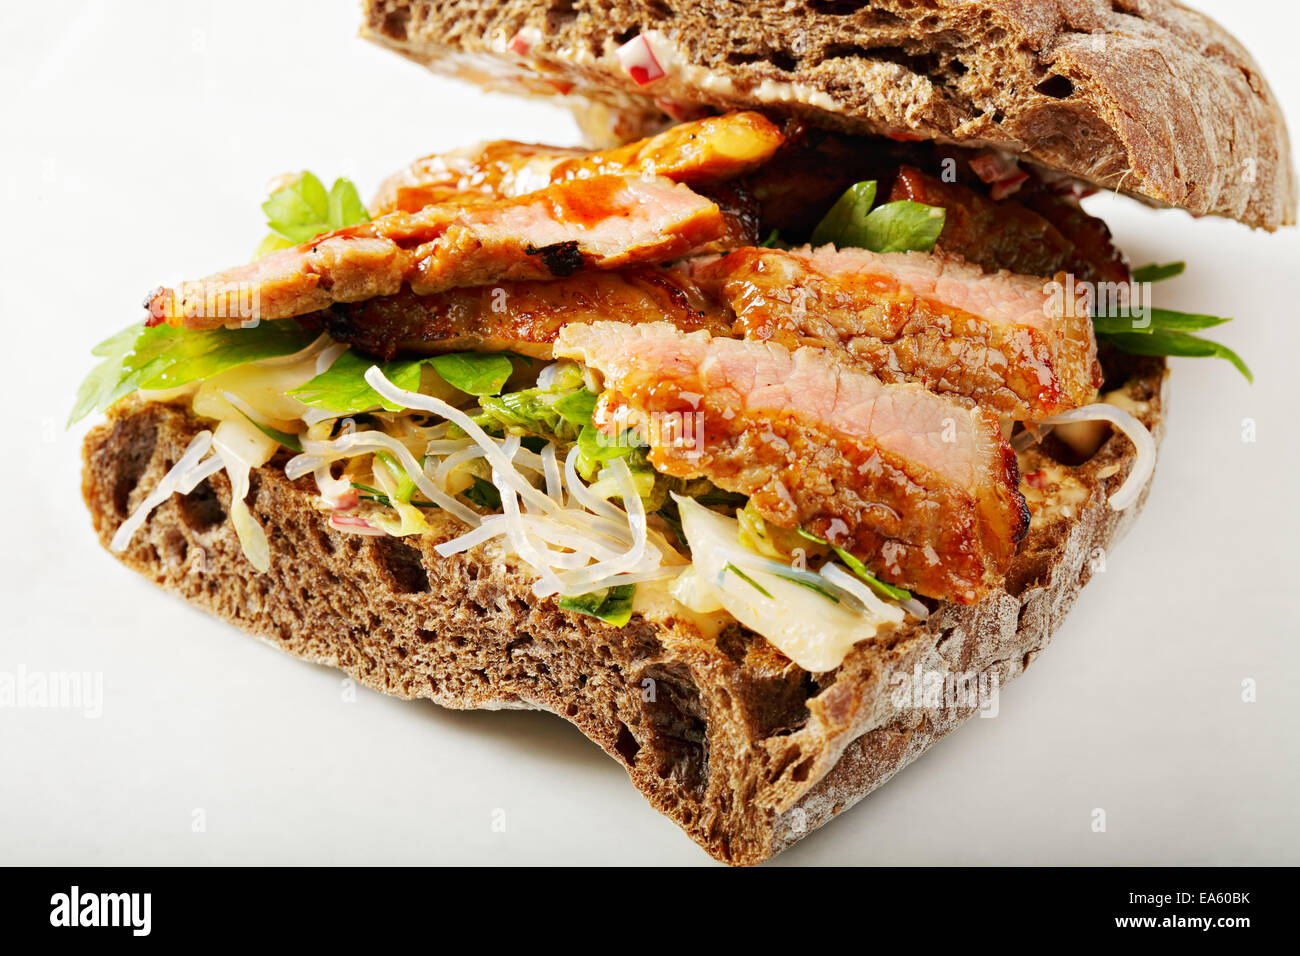 Beef sandwich with kimchi Stock Photo